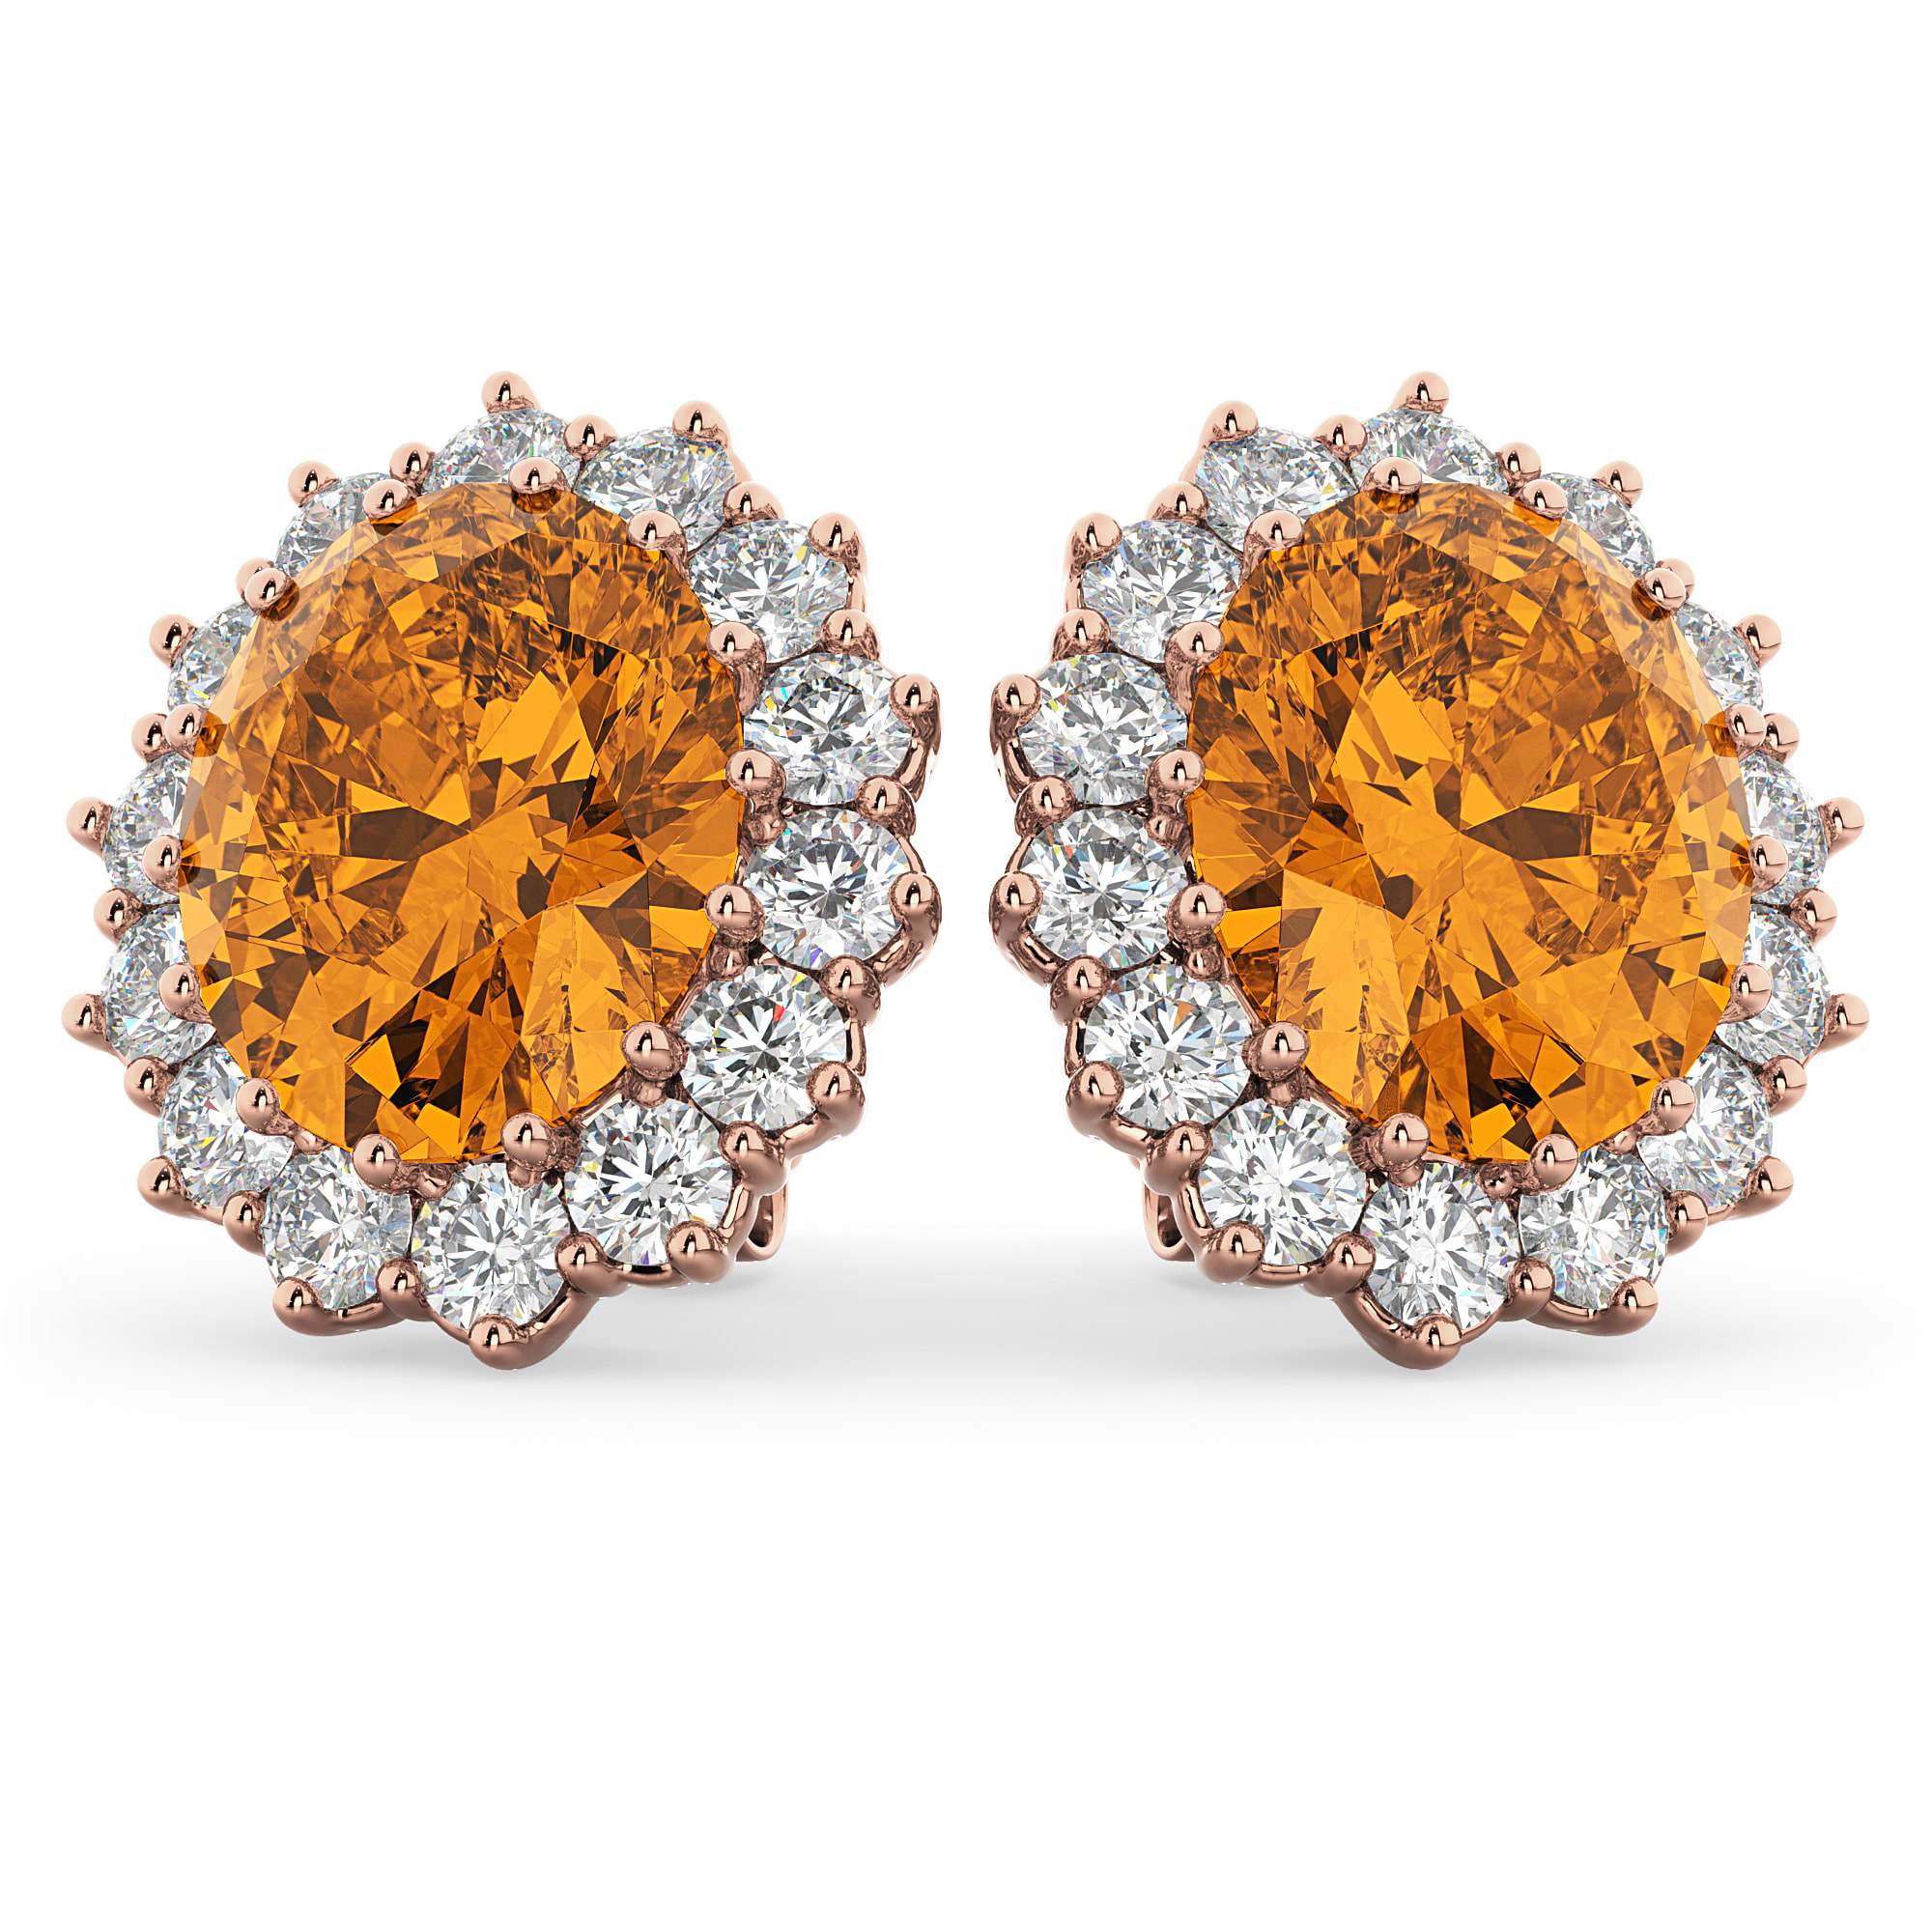 Oval Citrine and Diamond Earrings 14k Rose Gold (10.80ctw)